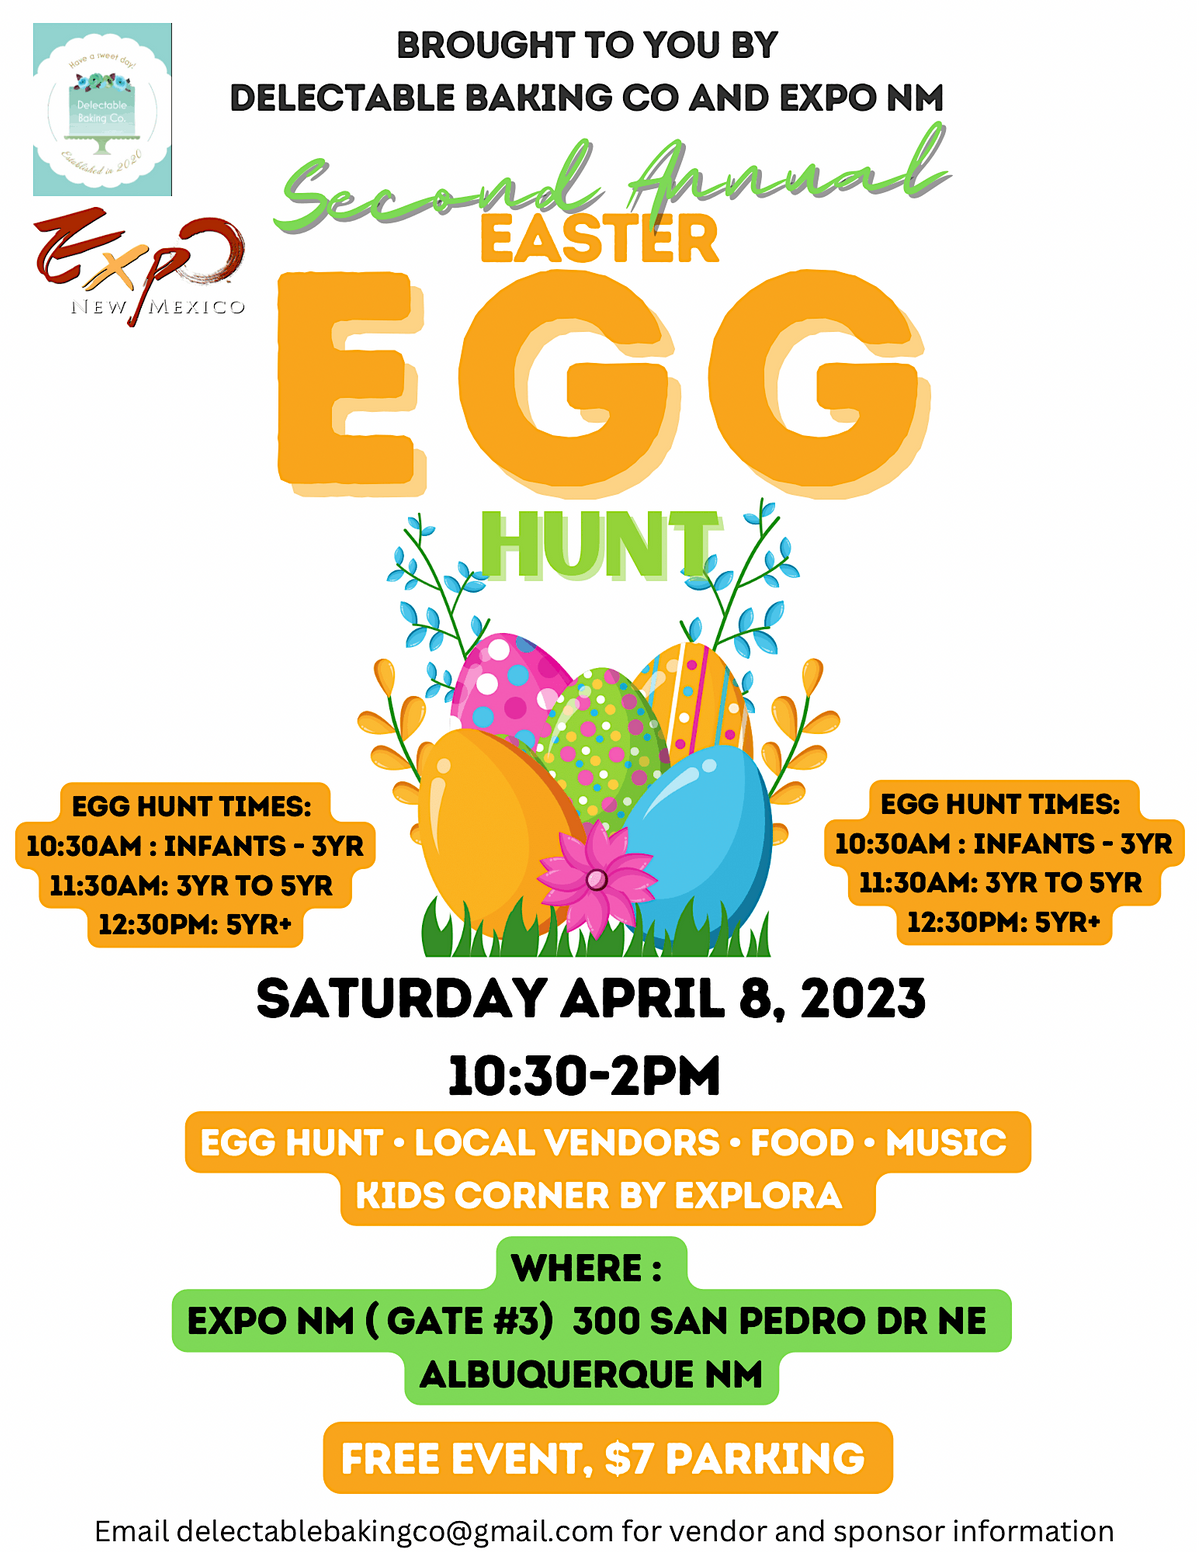 Easter Egg Hunt Expo New Mexico, Albuquerque, NM April 8, 2023